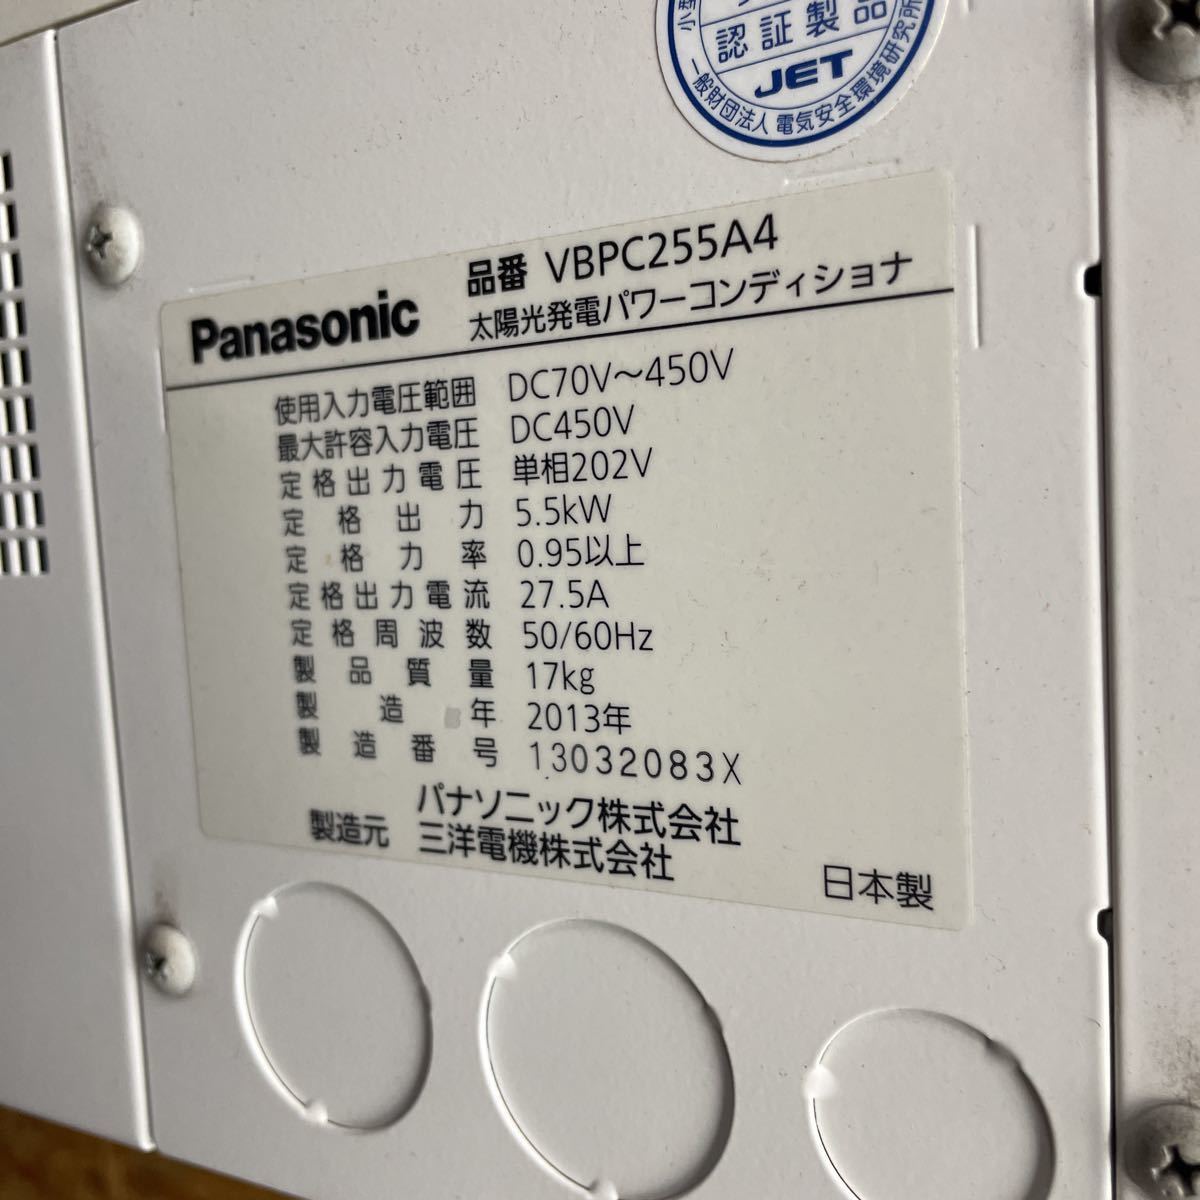  power conditioner Panasonic VBPC255A4 5.5kW power navy blue sun light departure electro- 1F shelves 2 mountain 6